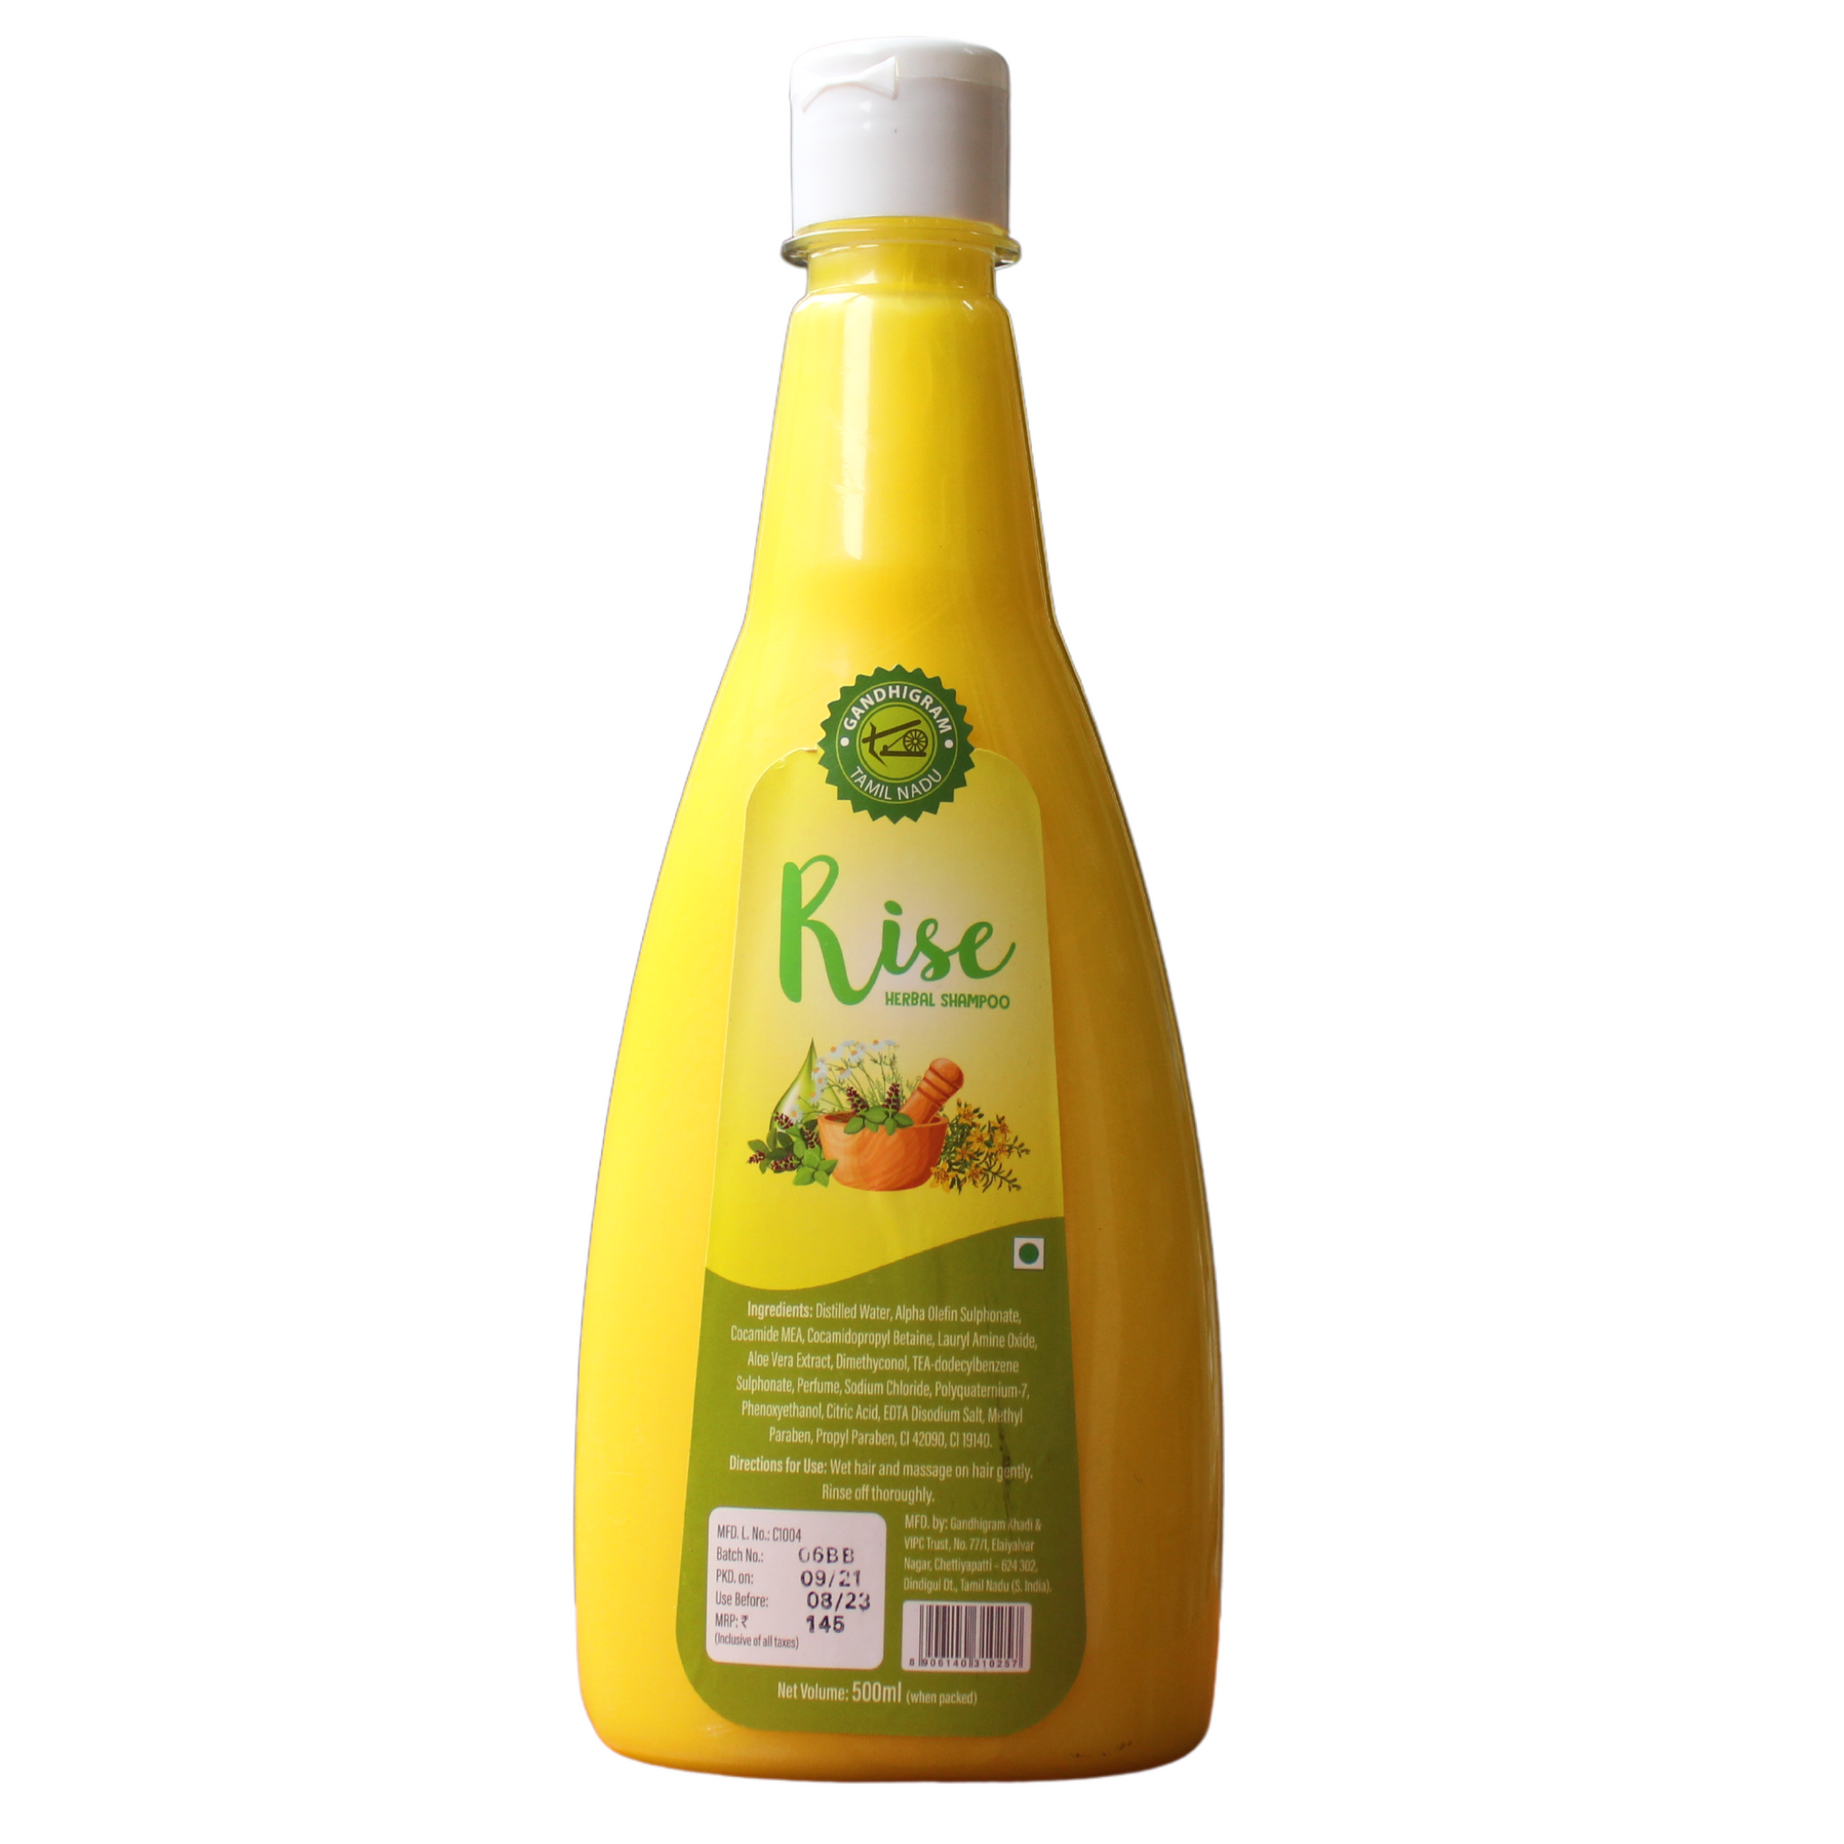 Shop Rise Herbal Shampoo - 500gm at price 145.00 from Gandhigram Online - Ayush Care